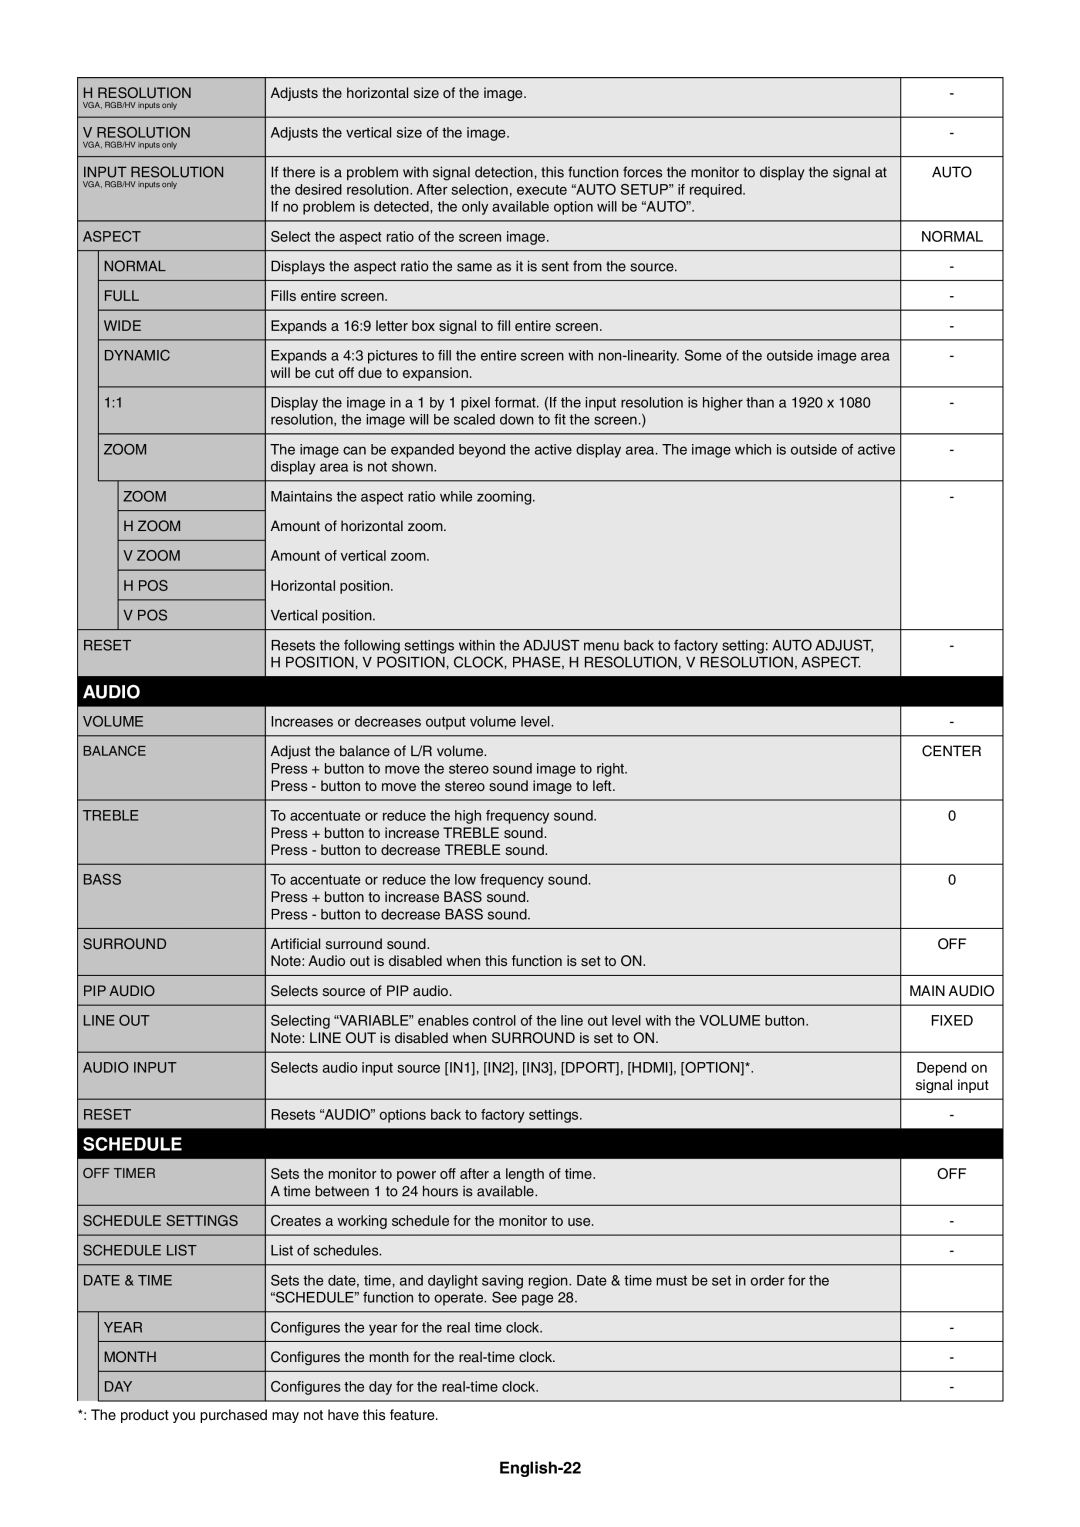 NEC V651, V462 user manual Audio, Schedule, English-22 